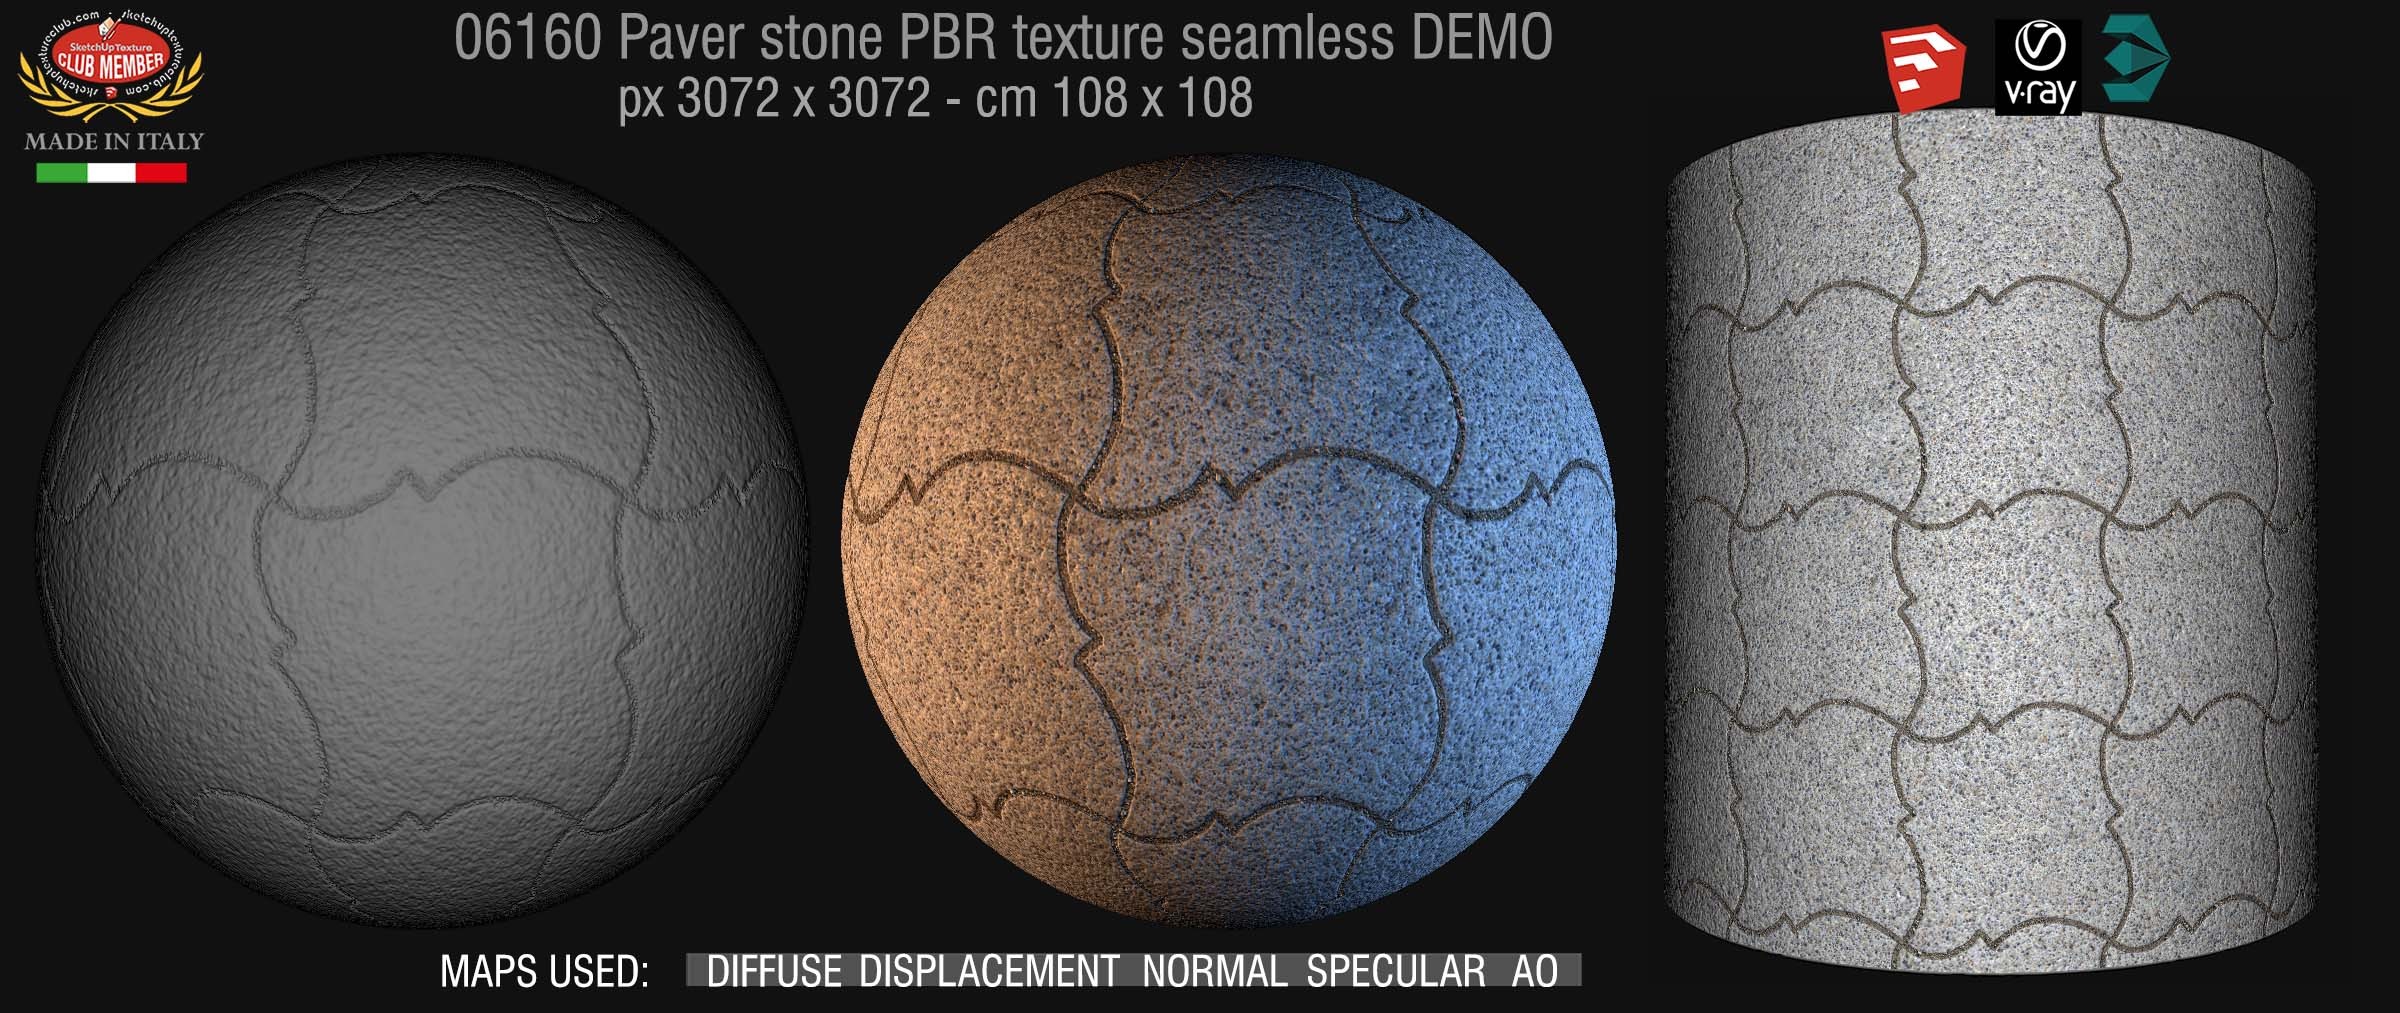 06160 paver stone PBR texture seamless DEMO